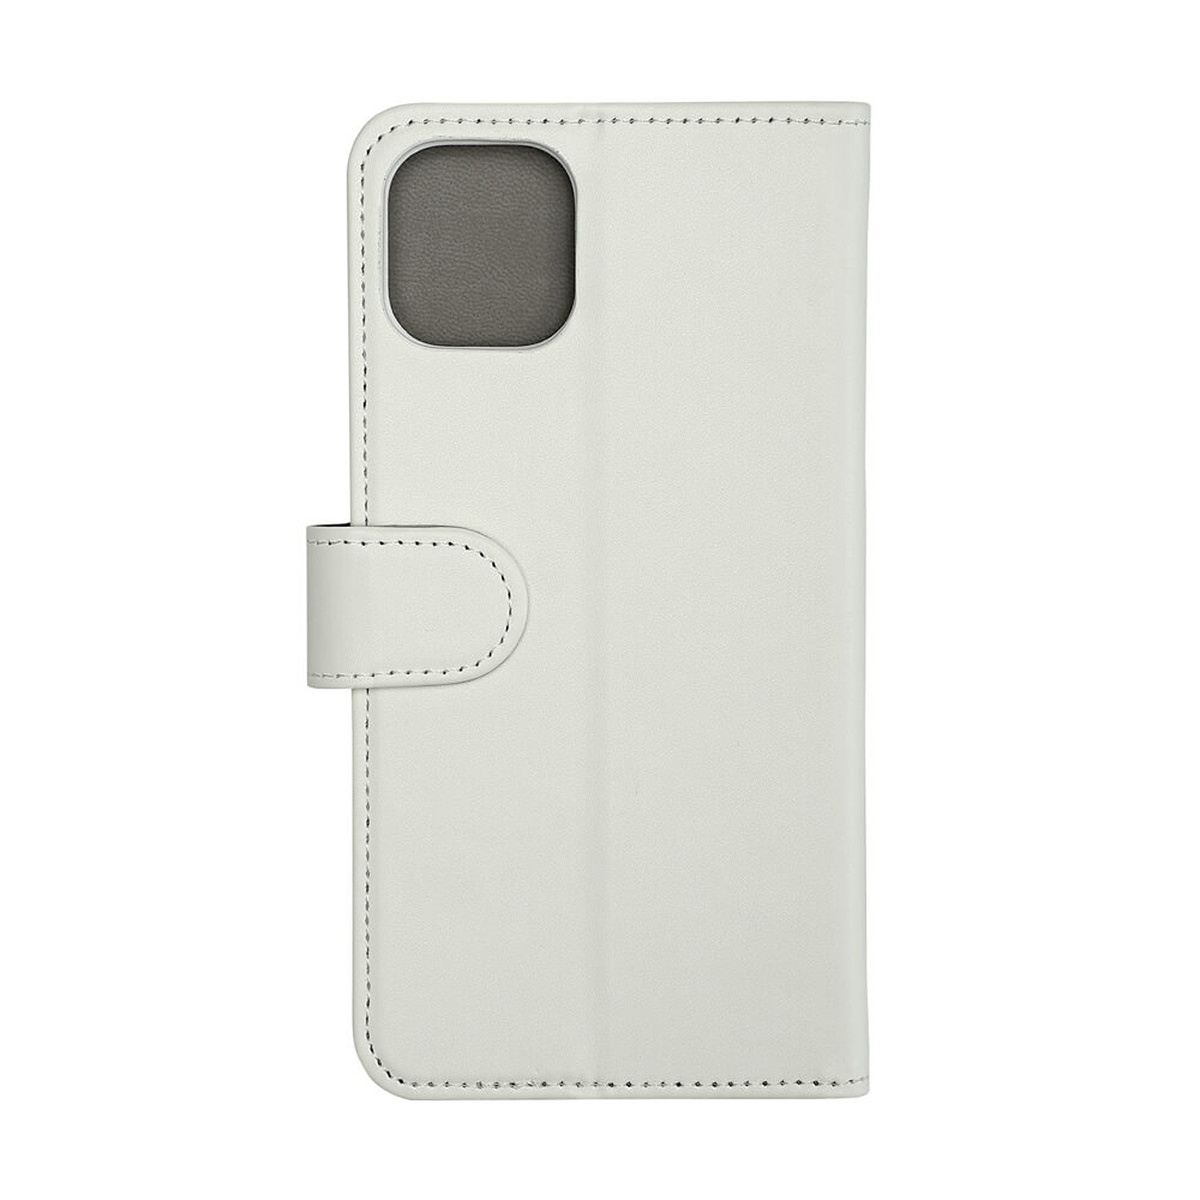 Gear plånboksväska, iPhone 11 Pro Max, vit